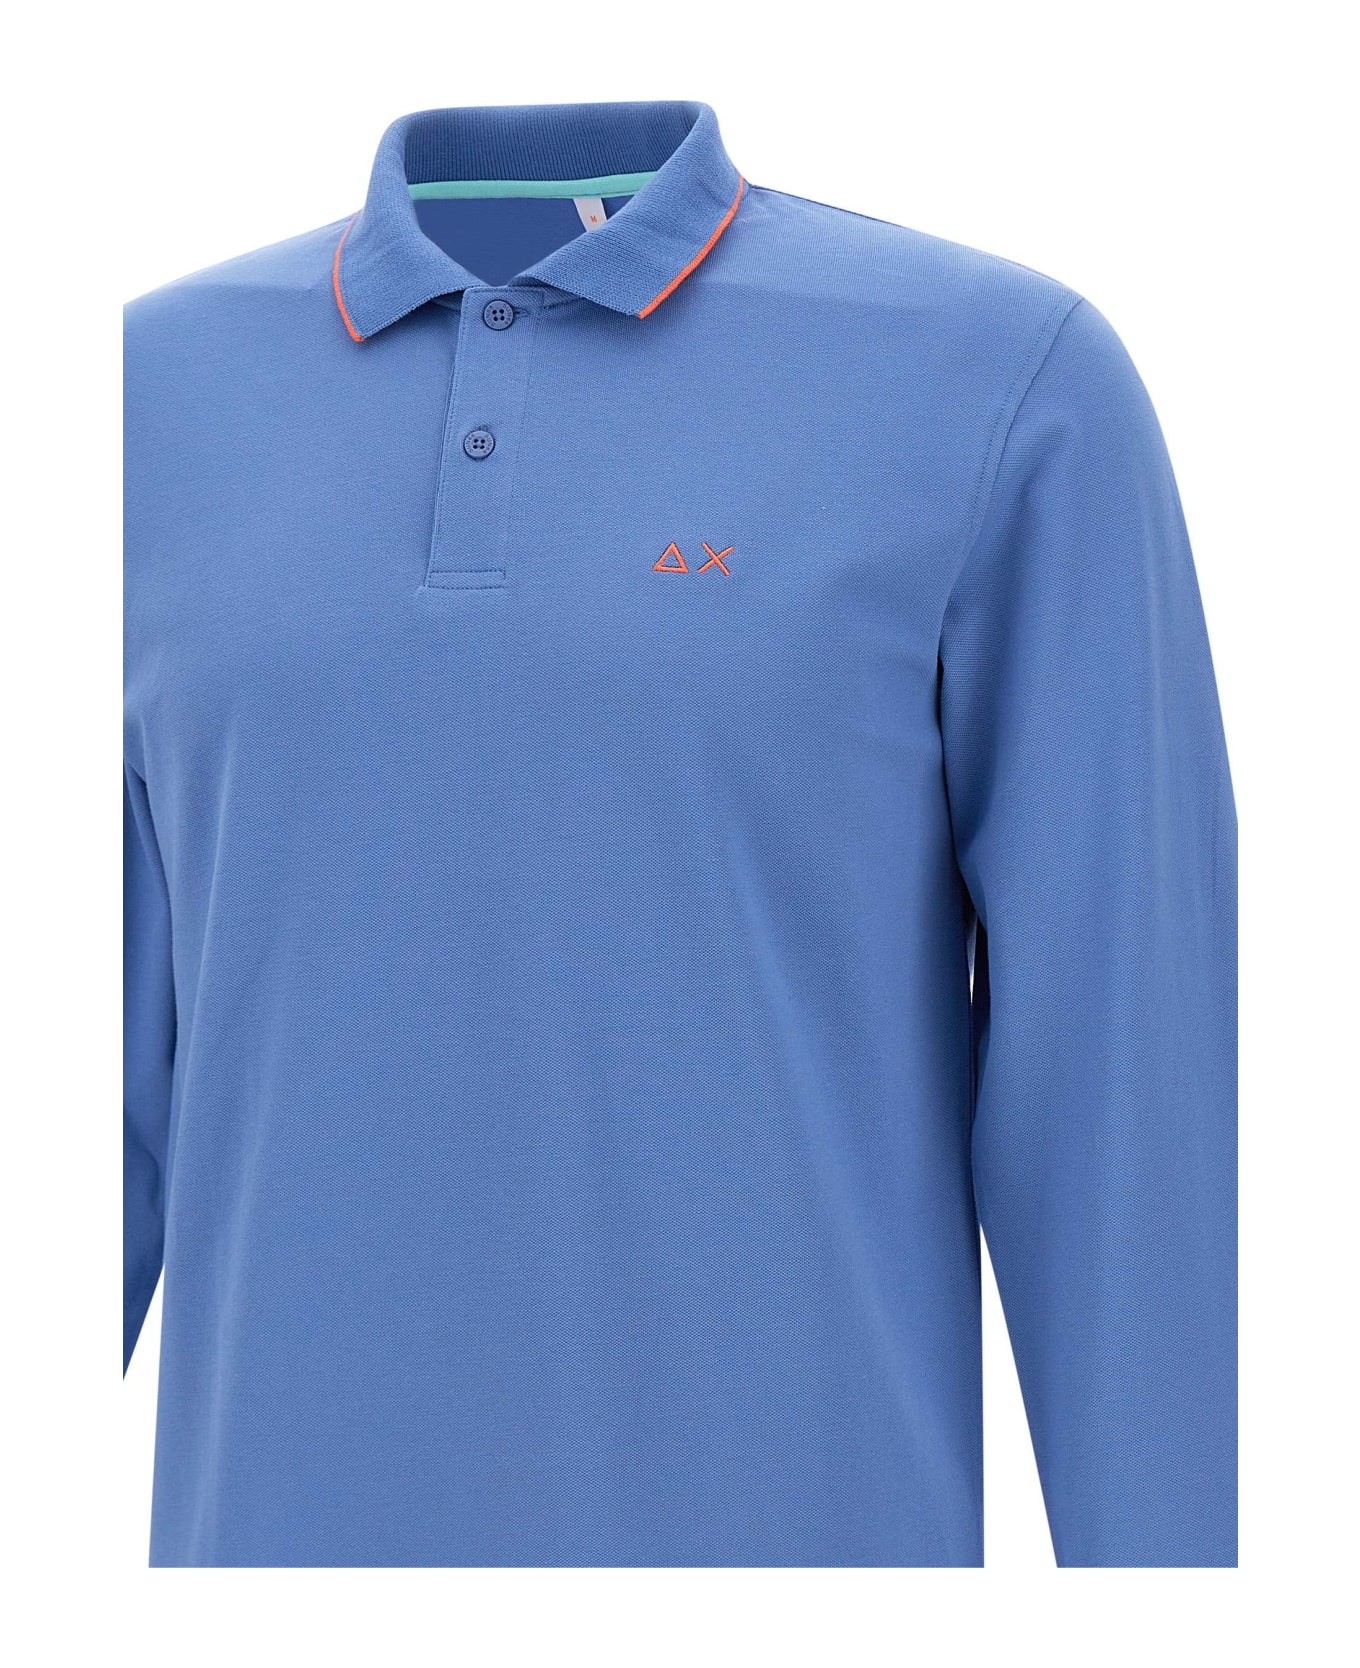 Sun 68 "small Stripes" Polo Shirt Cotton - LIGHT BLUE